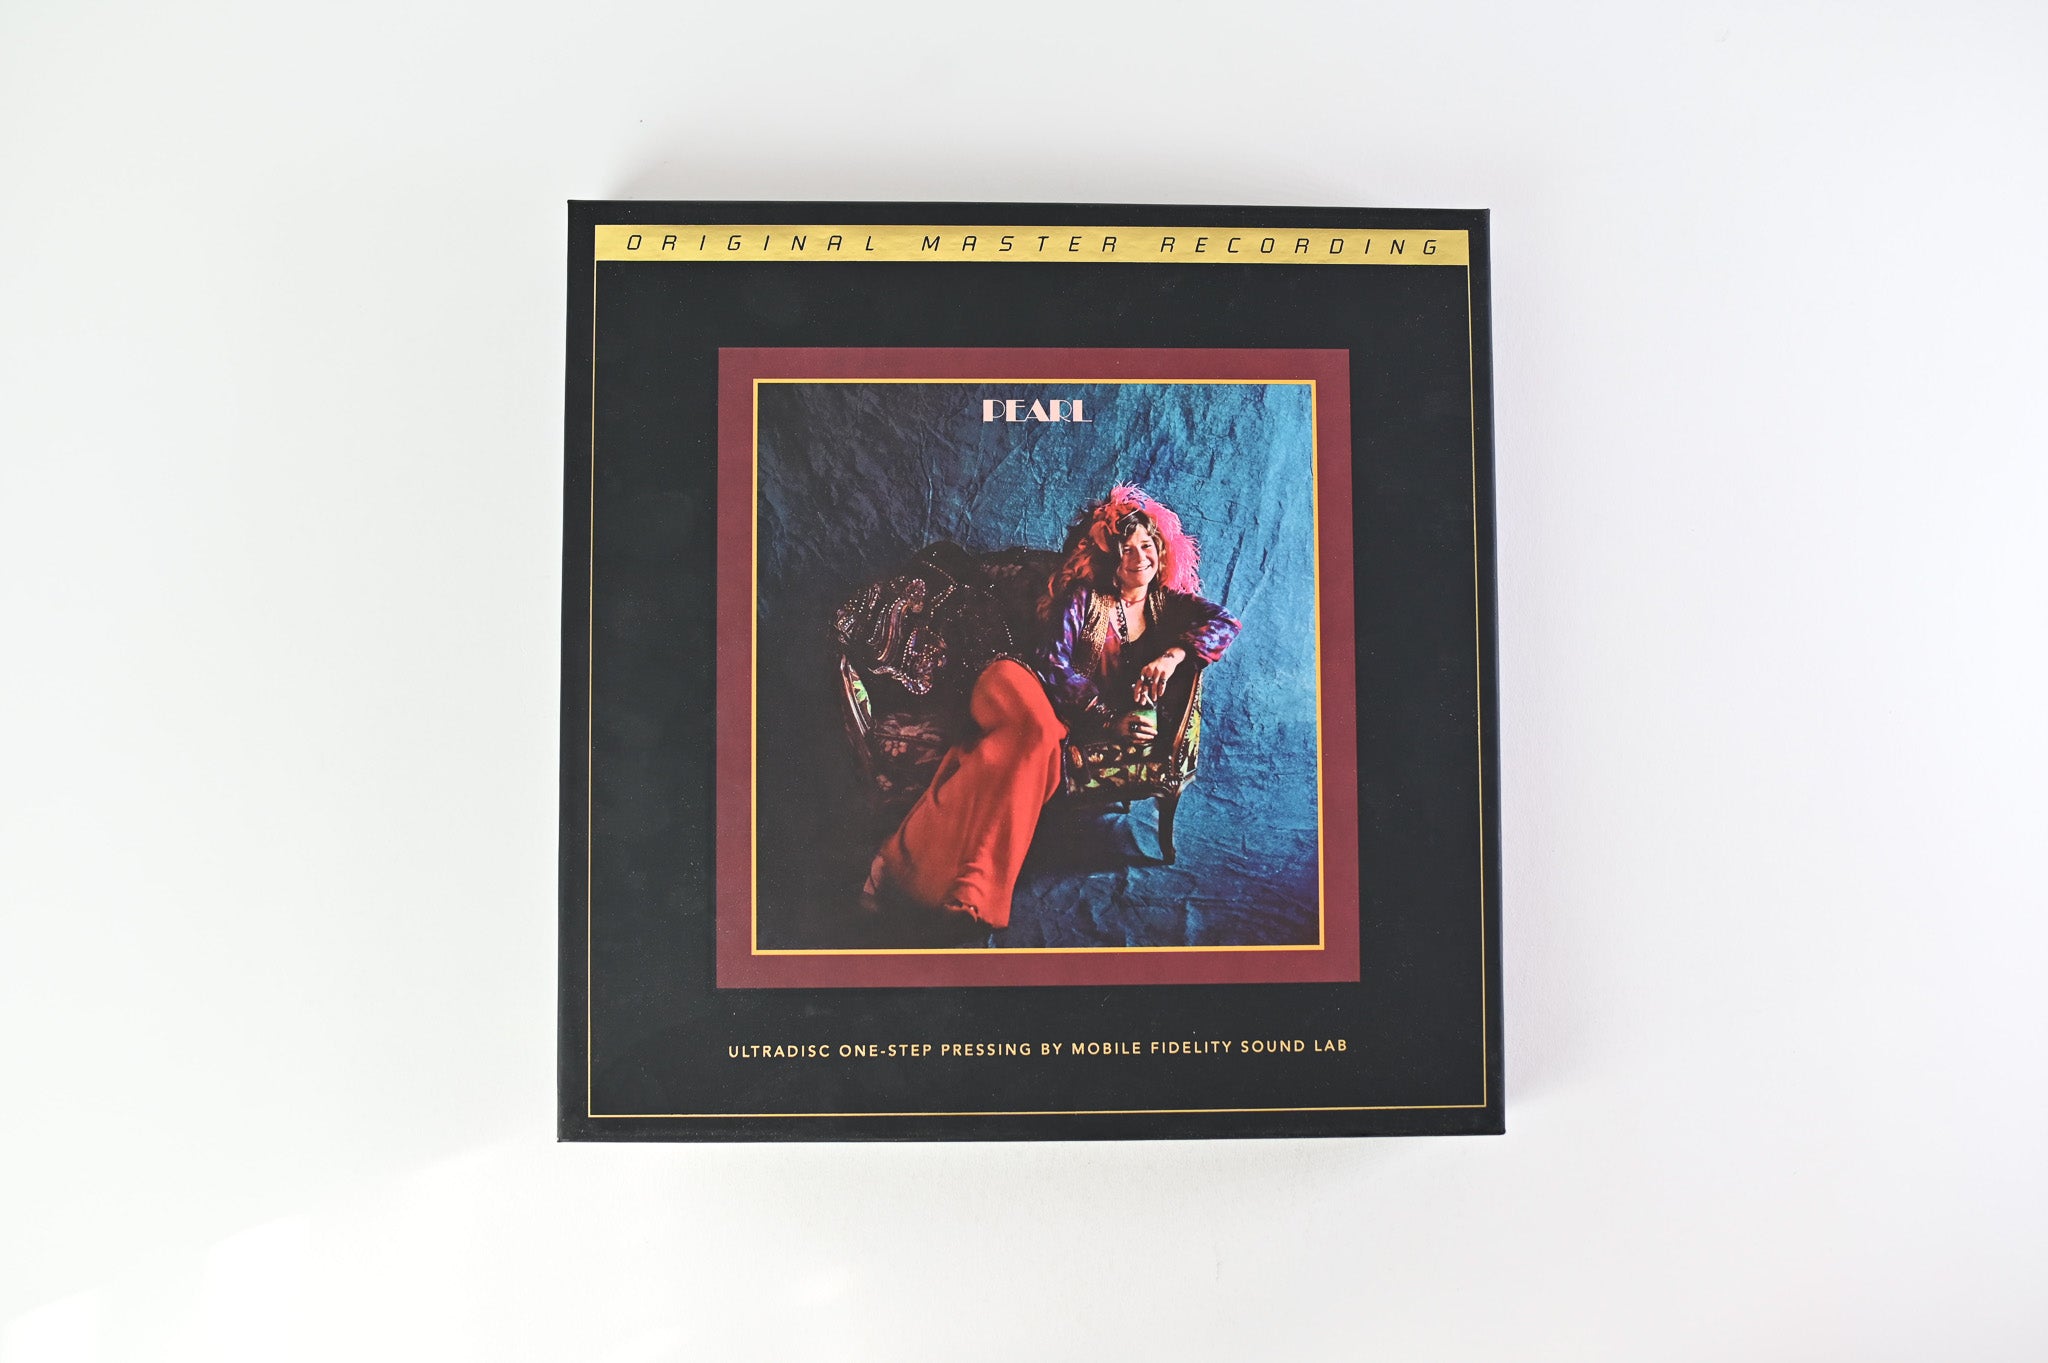 Janis Joplin - Pearl on Mobile Fidelity Sound Lab Ltd Numbered Ultradisc Box Set